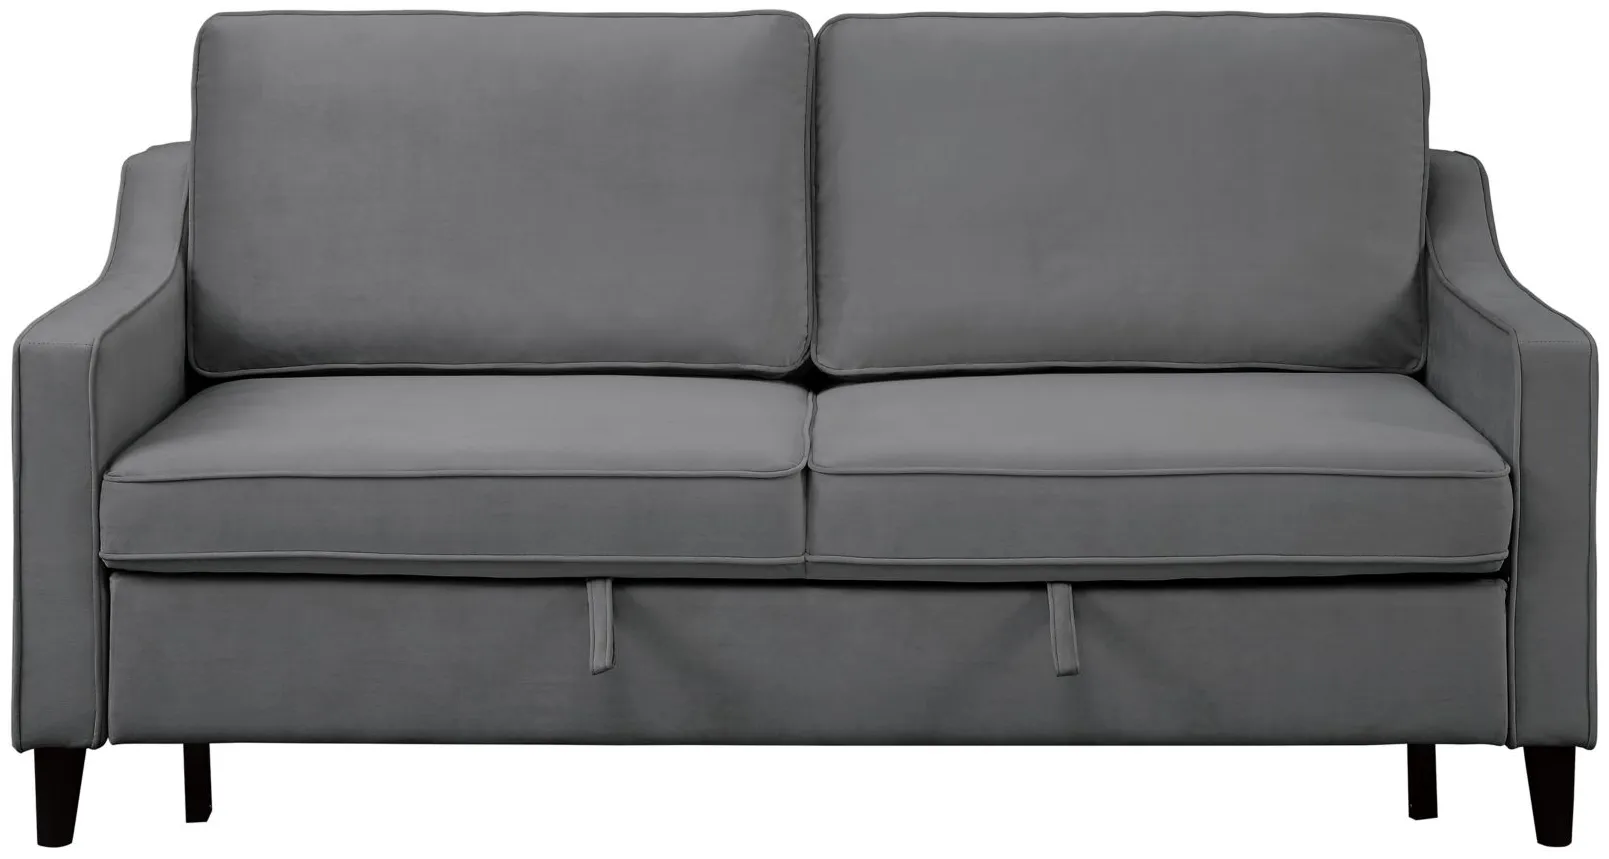 Dickinson Convertible Sofa in Dark Gray by Homelegance